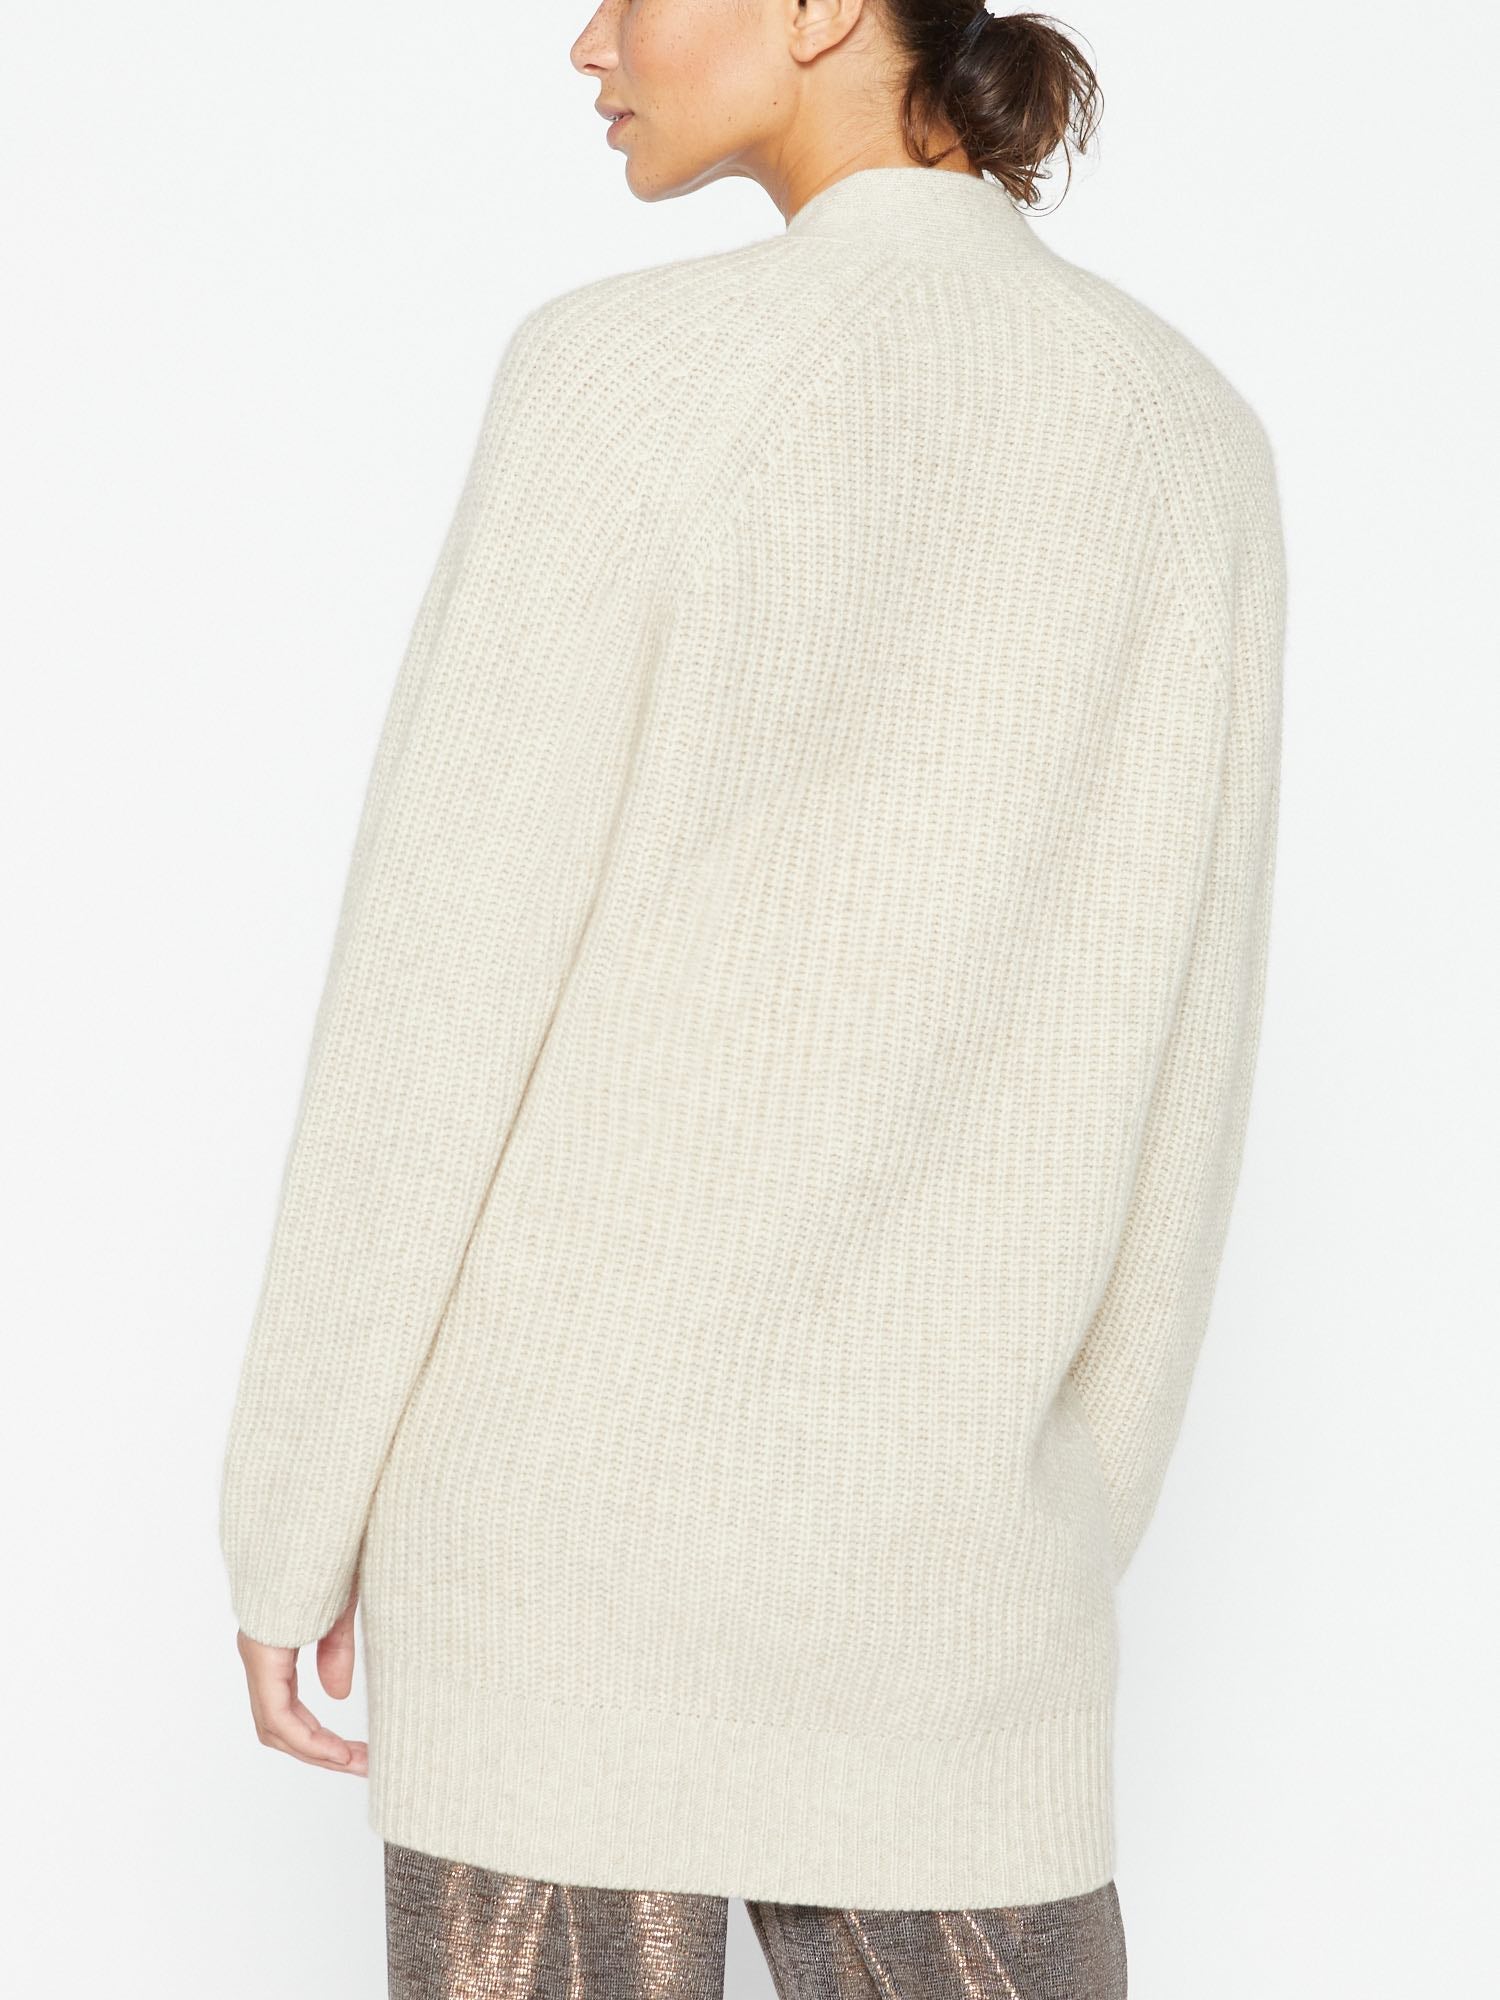 Jenny beige cashmere wool cardigan sweater back view